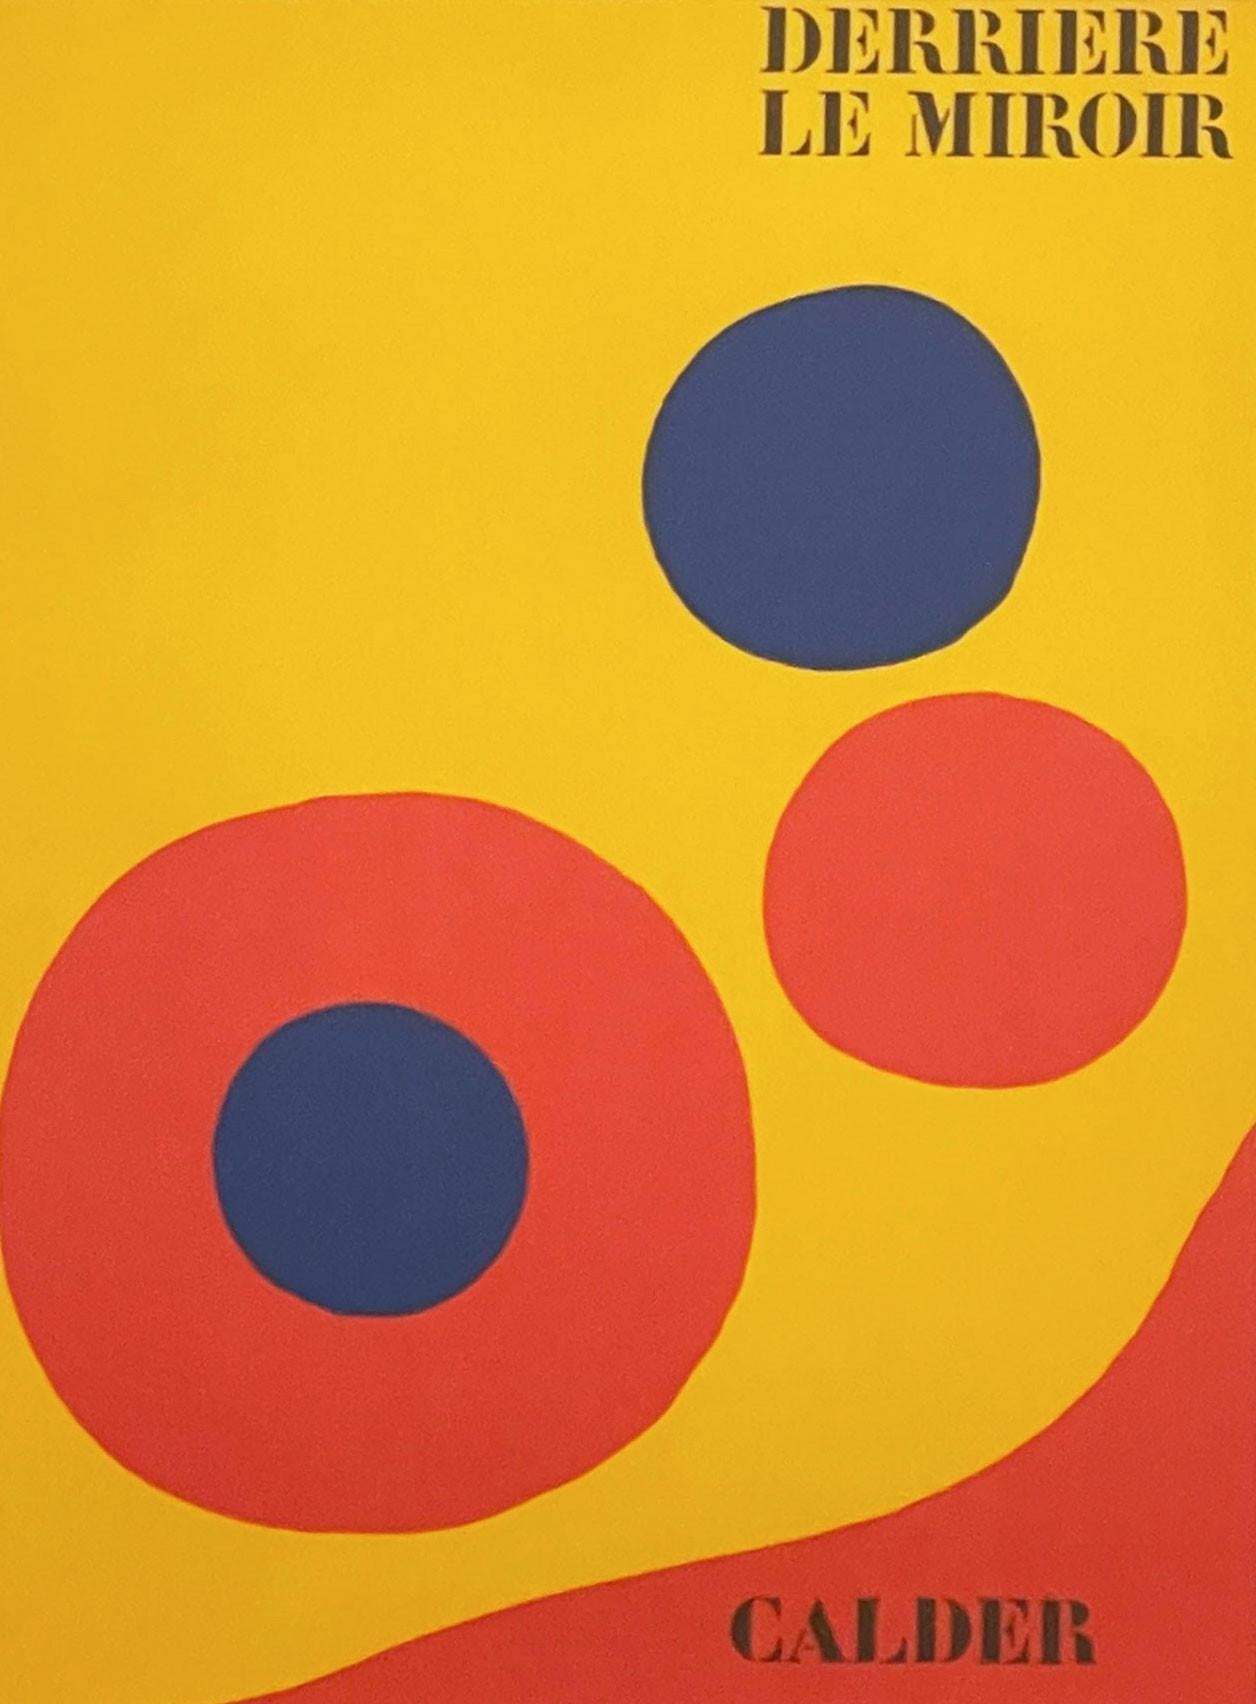 Alexander Calder Abstract Print - Cover Derriere le Miroir #201